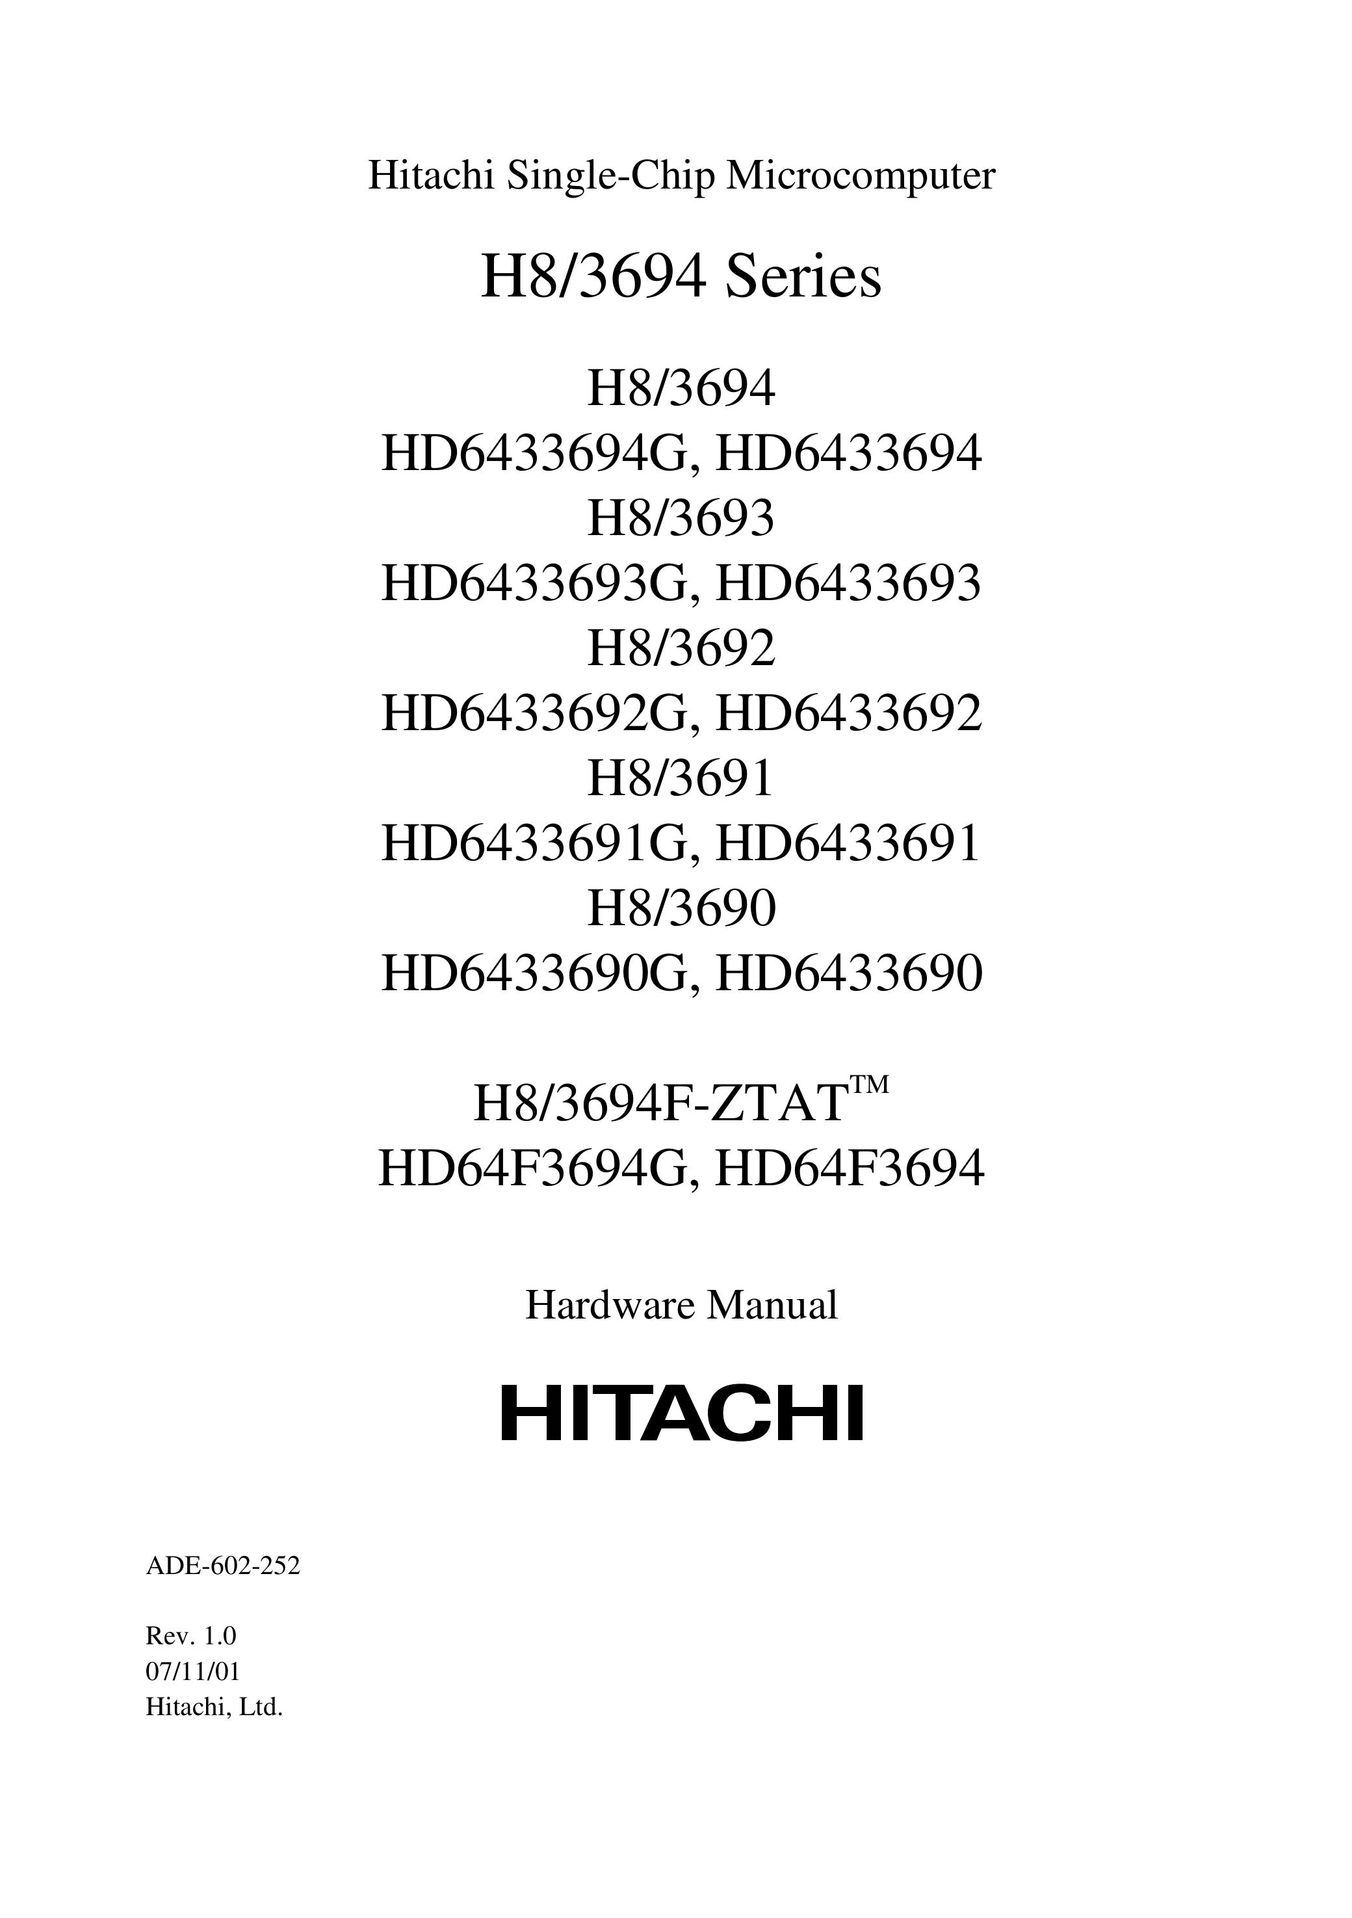 Hitachi HD6433692G TV Mount User Manual